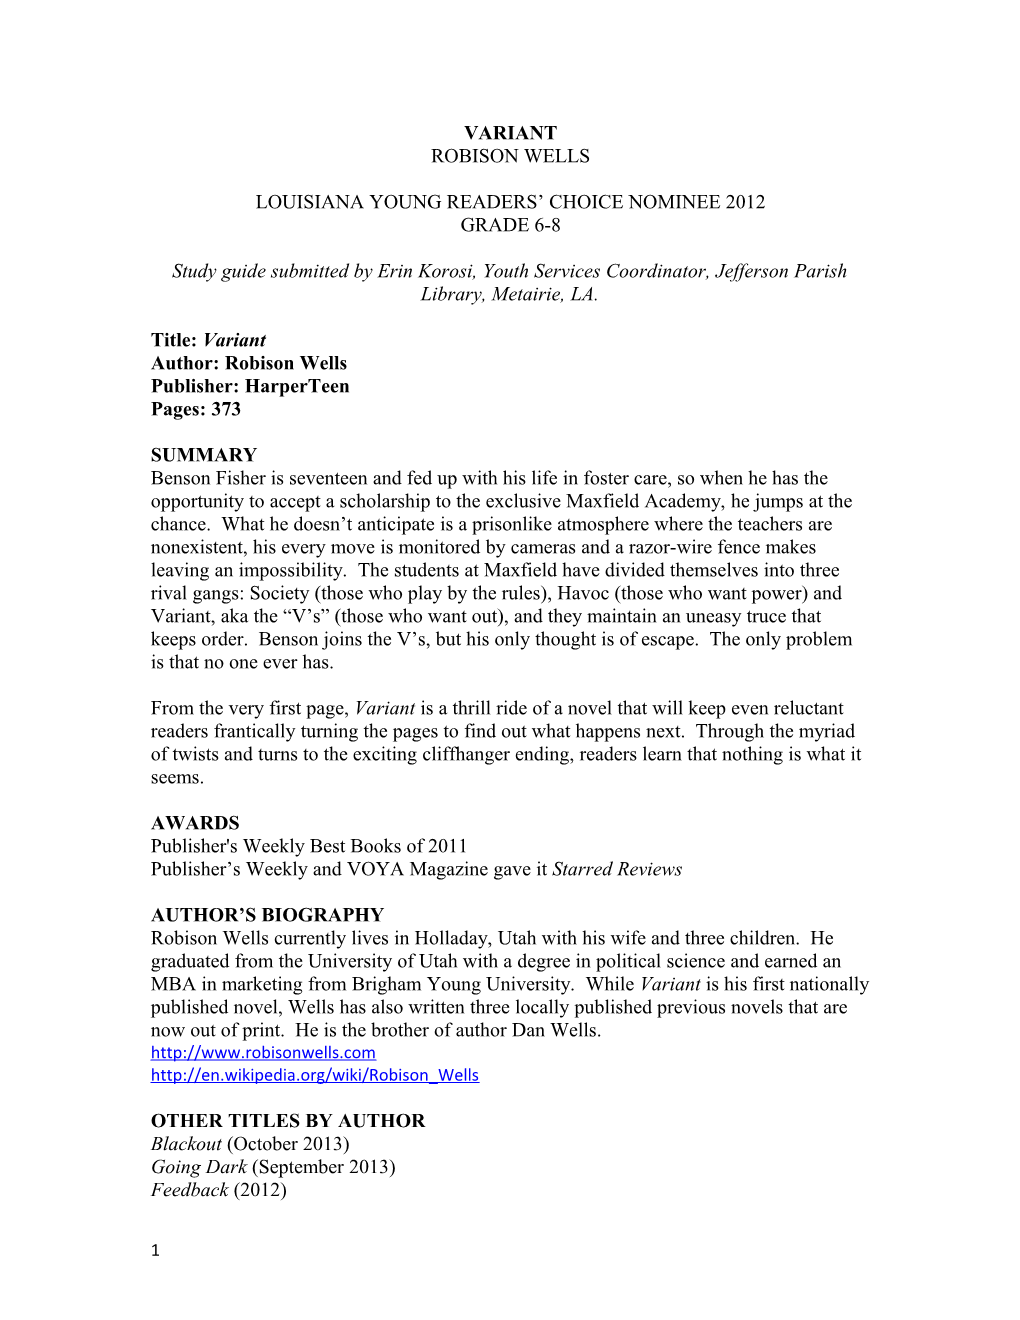 Louisiana Young Readers Choice Nominee 2012